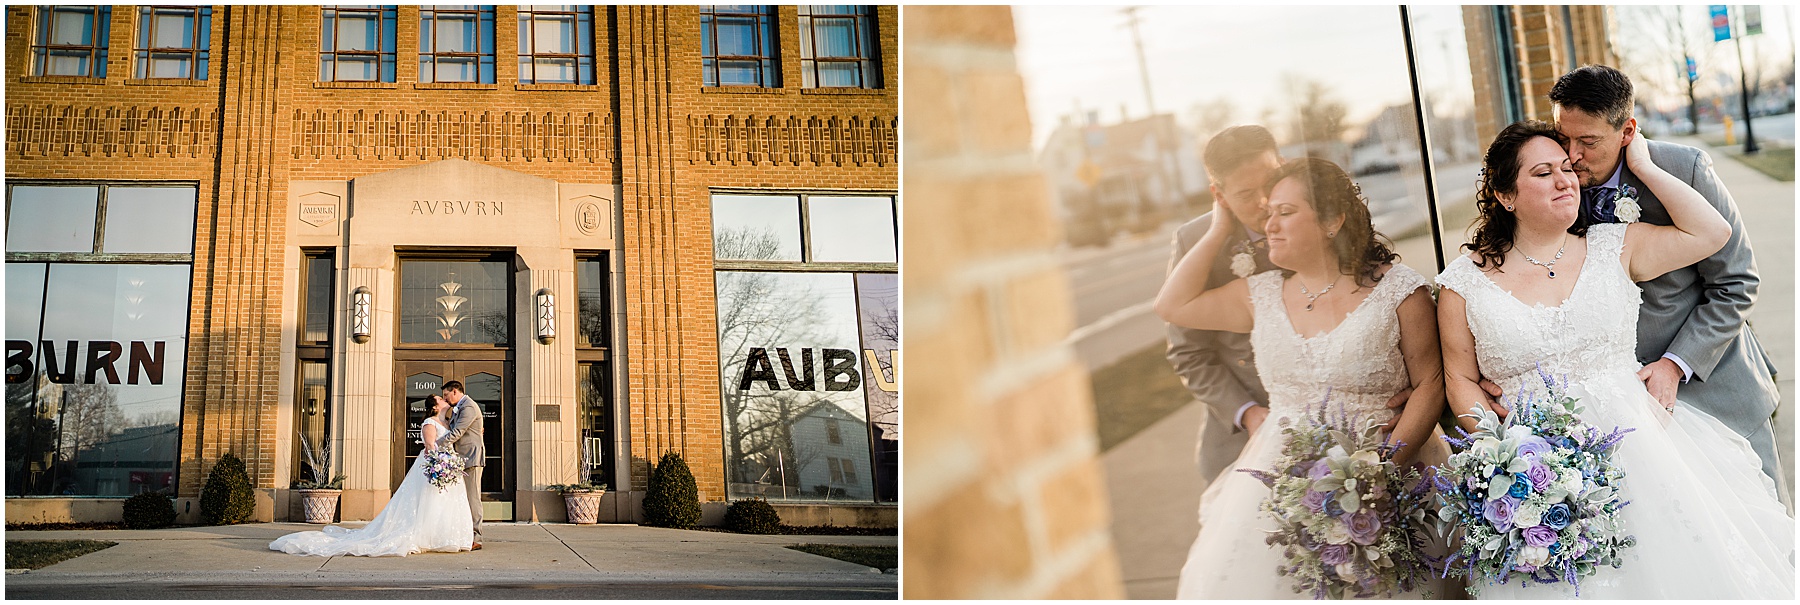 bridal portraits in downtown Auburn, Indiana